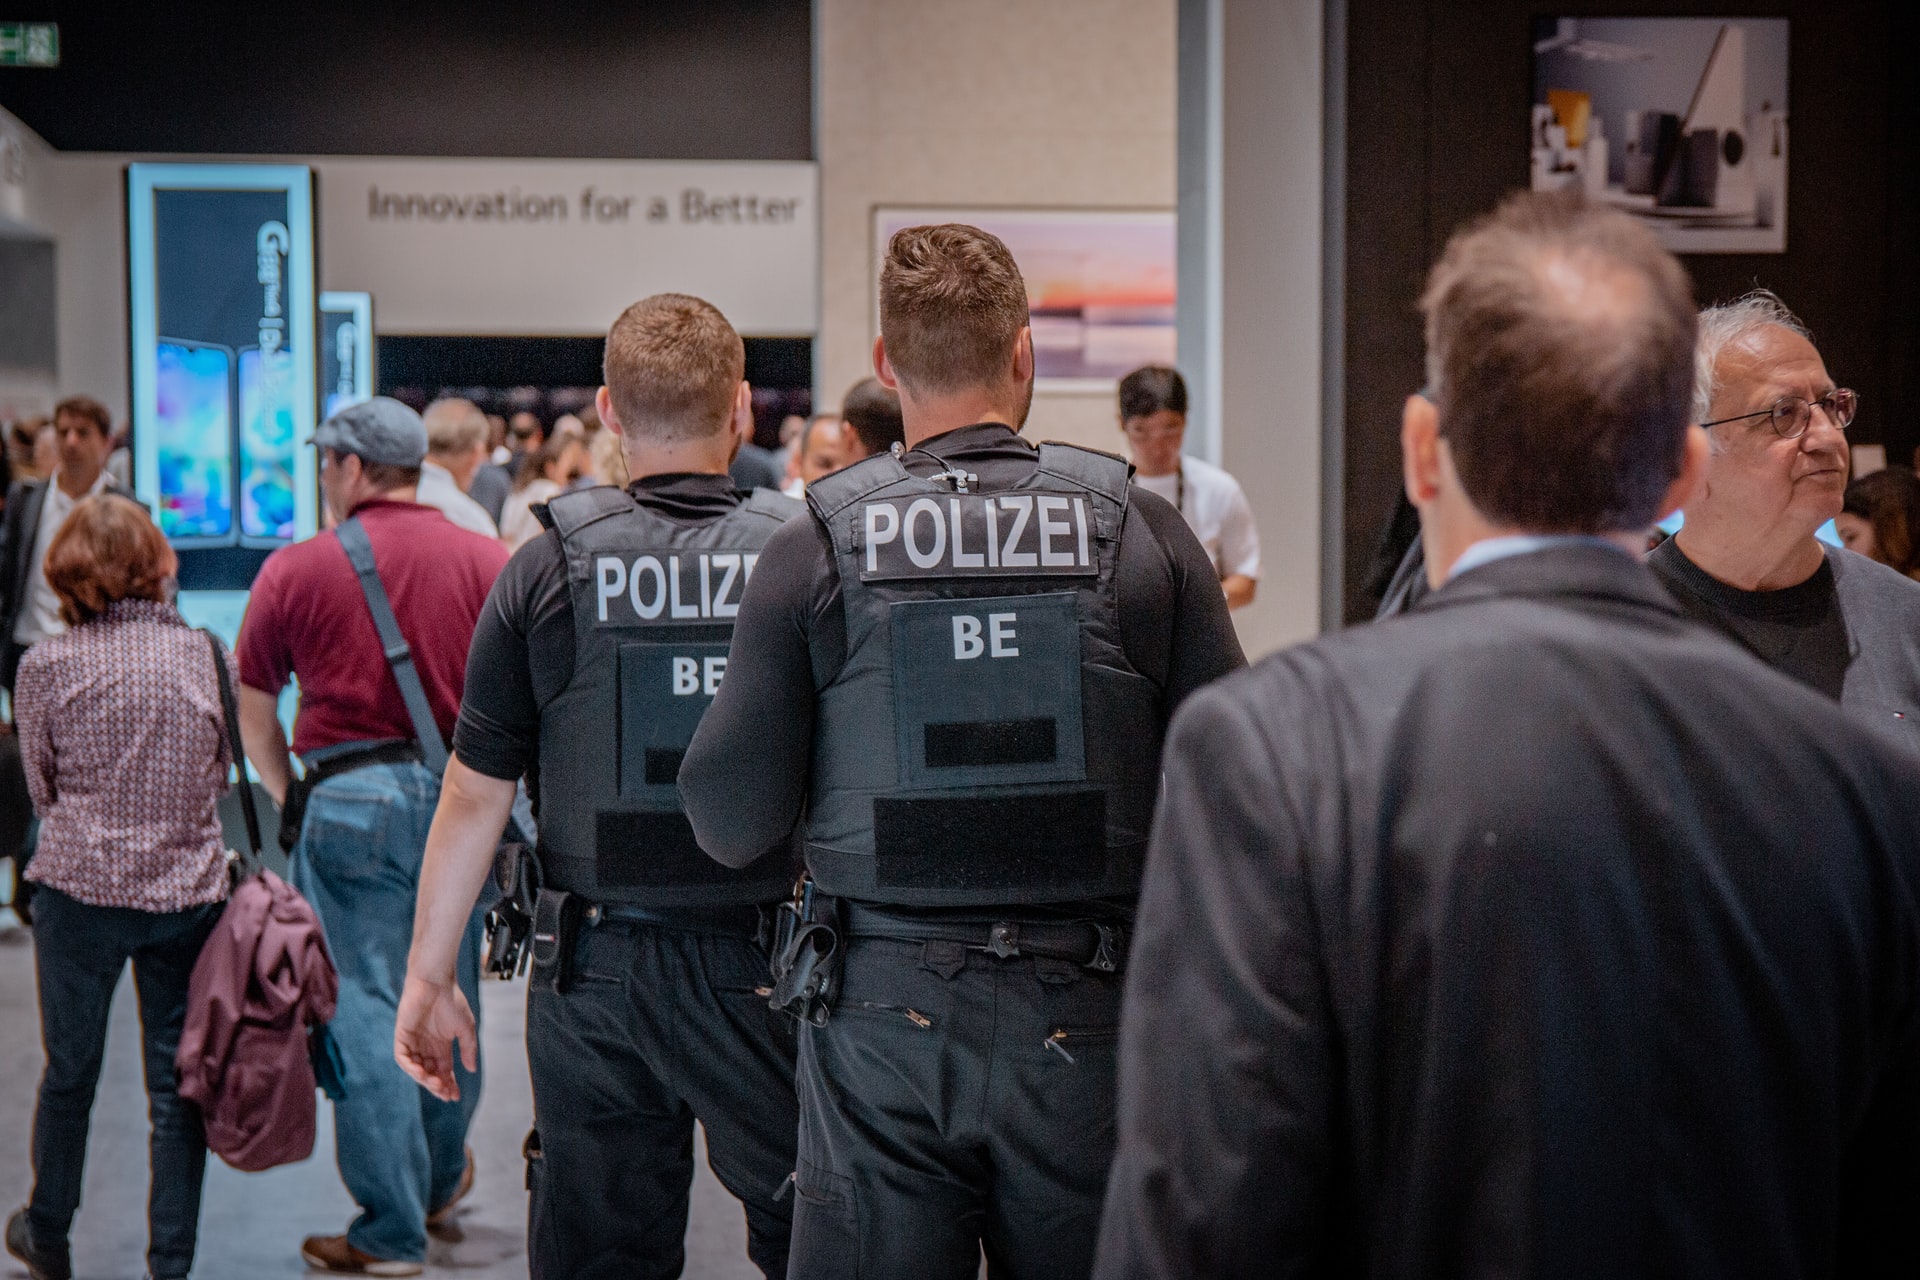 Politie_Germania